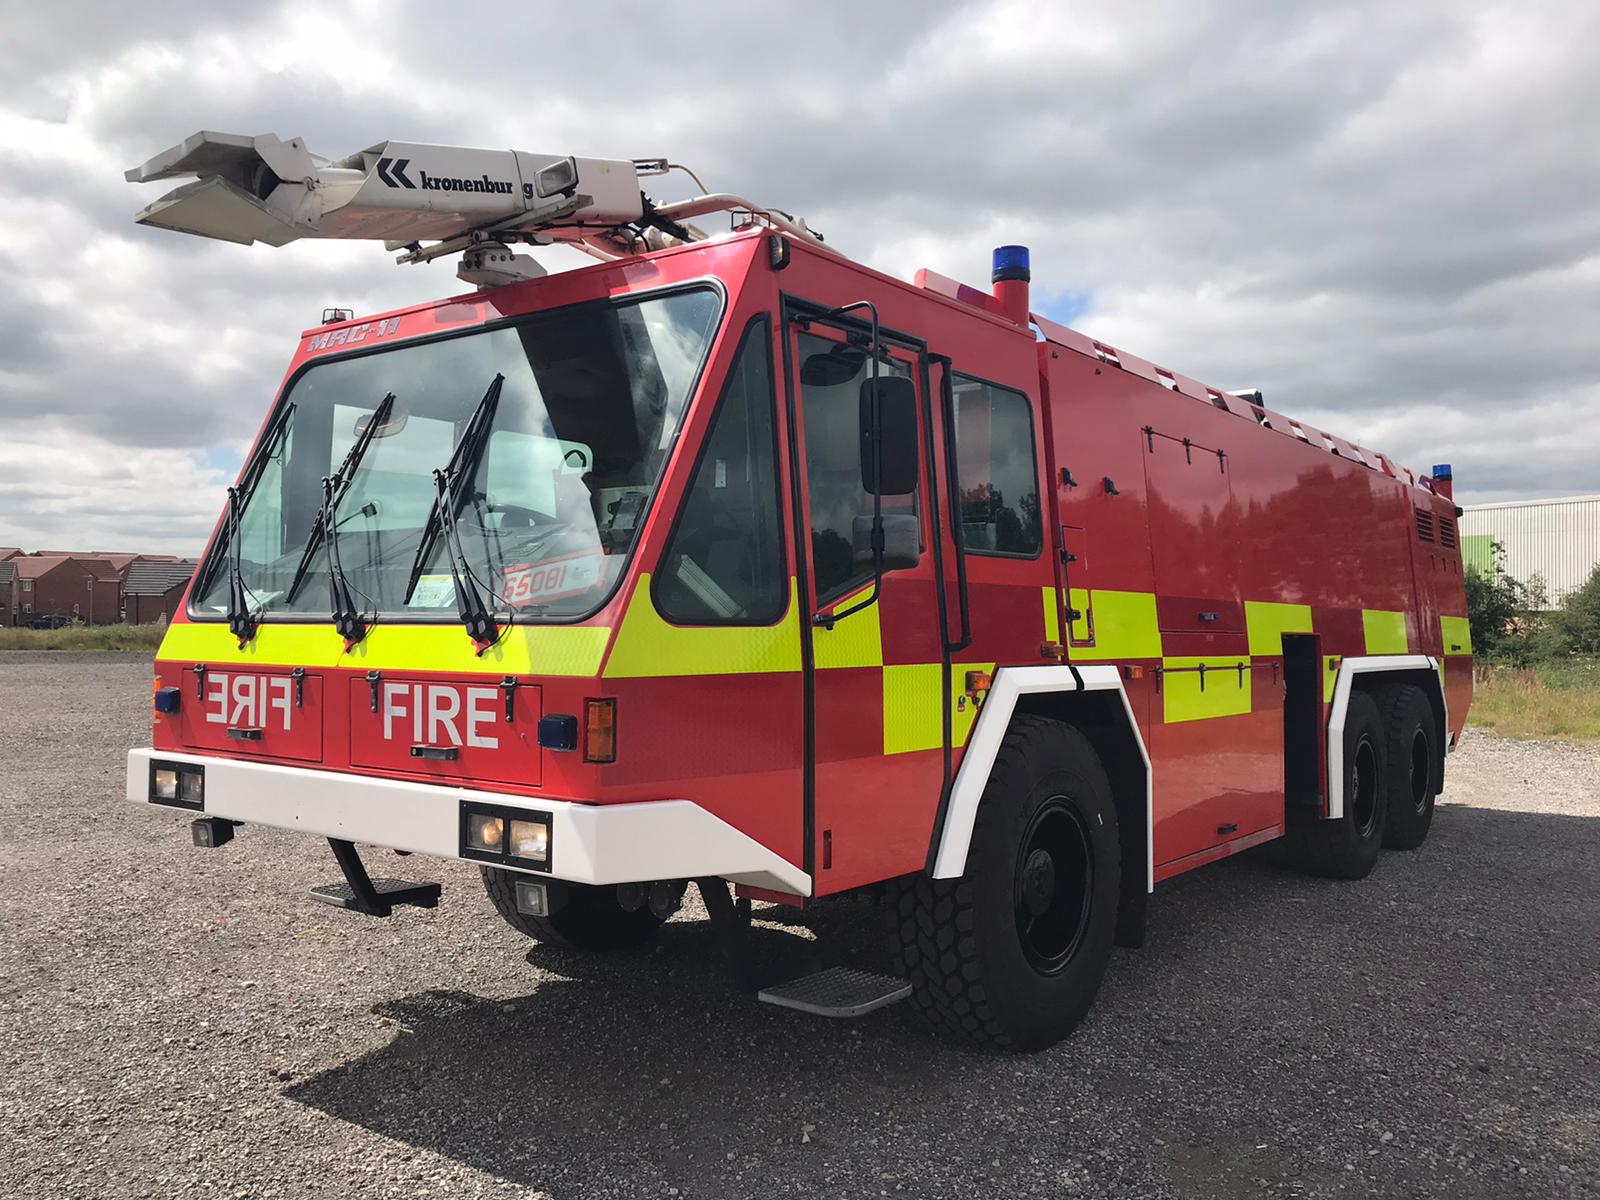 KRONENBURG MAC 11 6X6 Airport Fire Engine - Govsales of ex military vehicles for sale, mod surplus